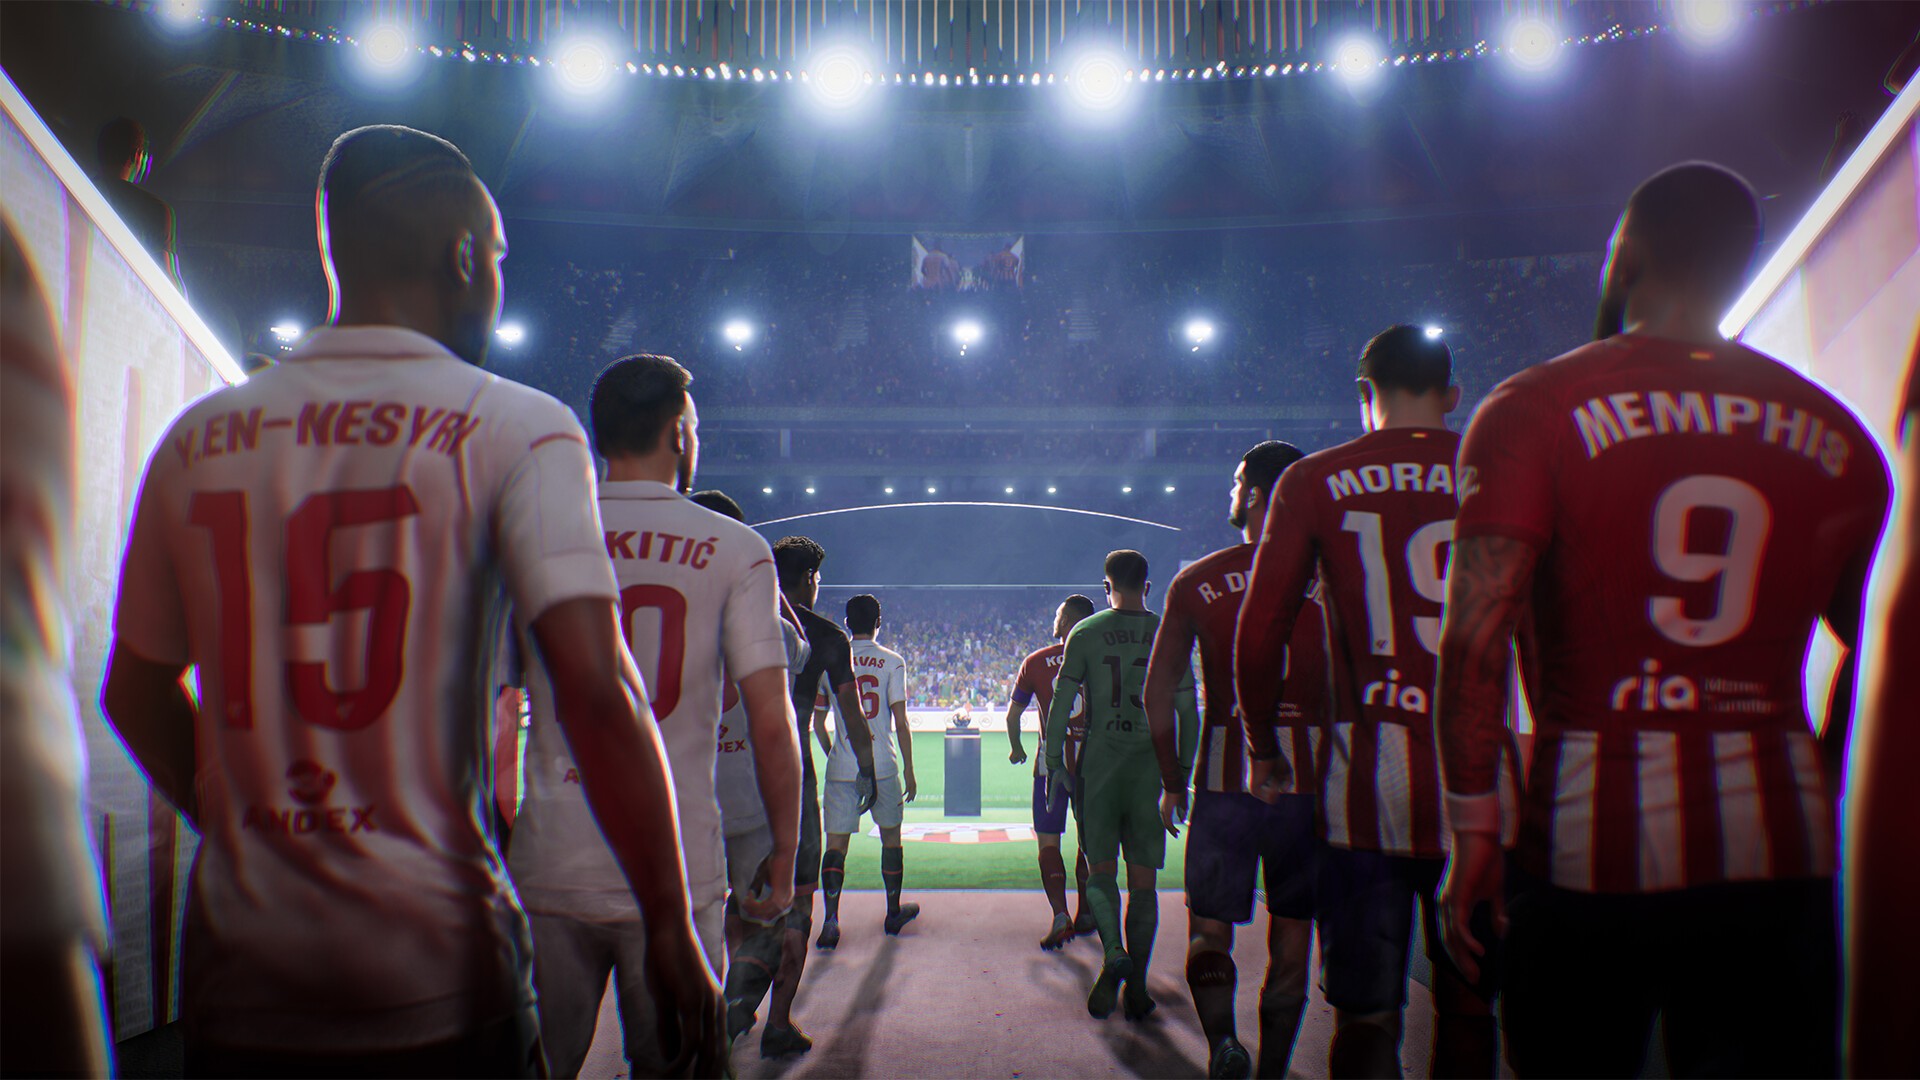 EA SPORTS FC™ 24 Steam Charts & Stats